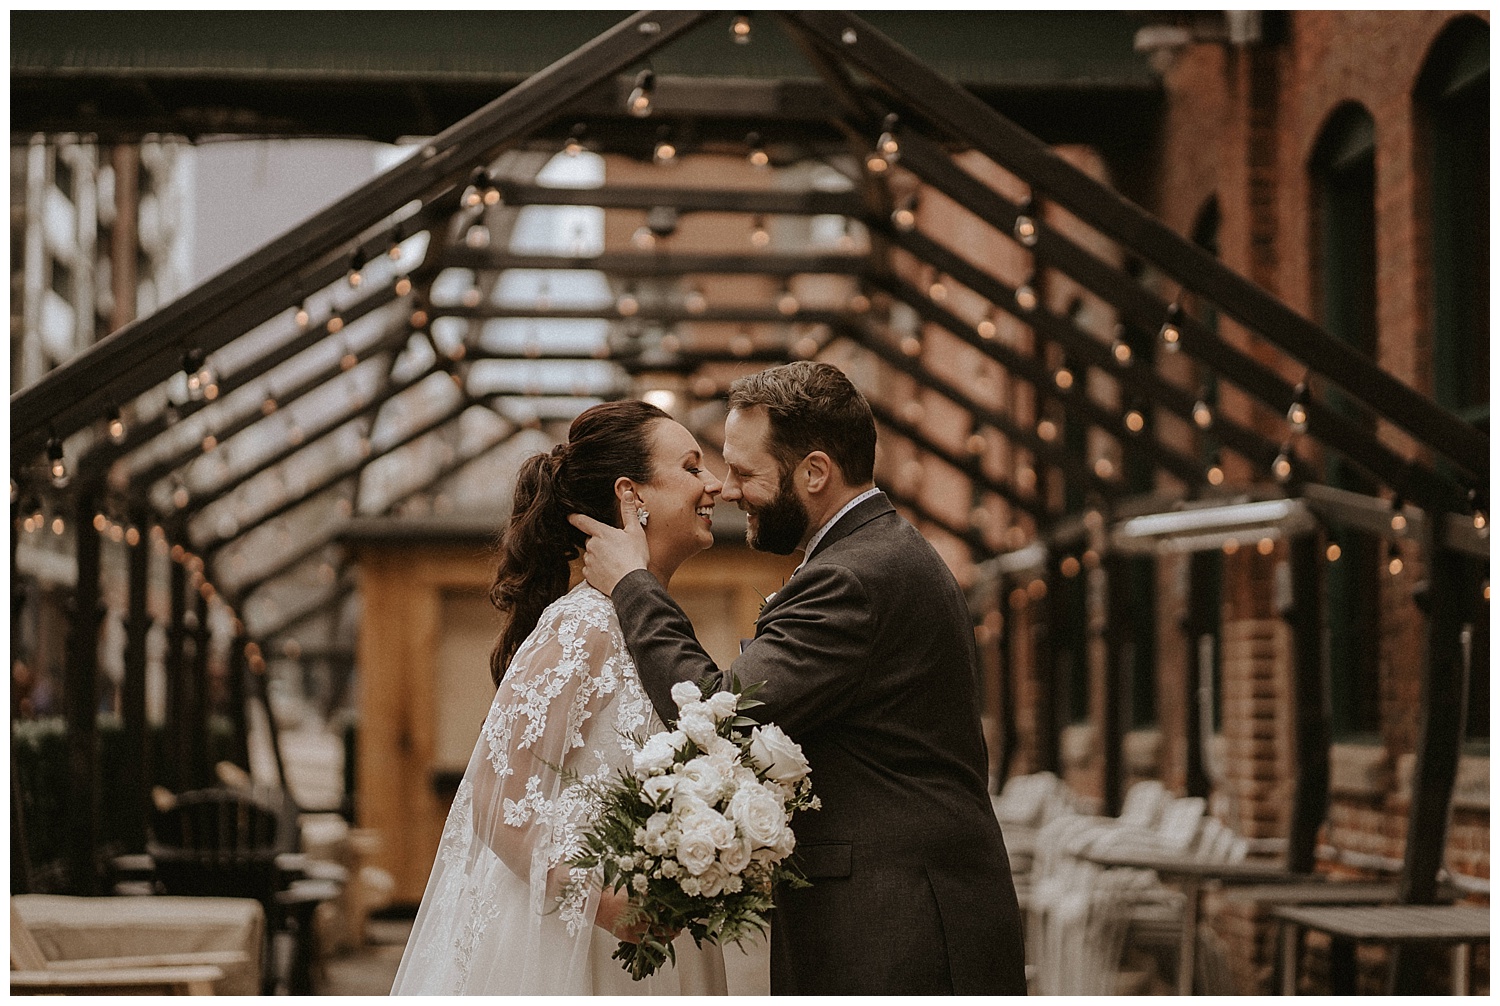 Katie Marie Photography | Archeo Wedding Arta Gallery Wedding | Distillery District Wedding | Toronto Wedding Photographer | Hamilton Toronto Ontario Wedding Photographer |_0029.jpg